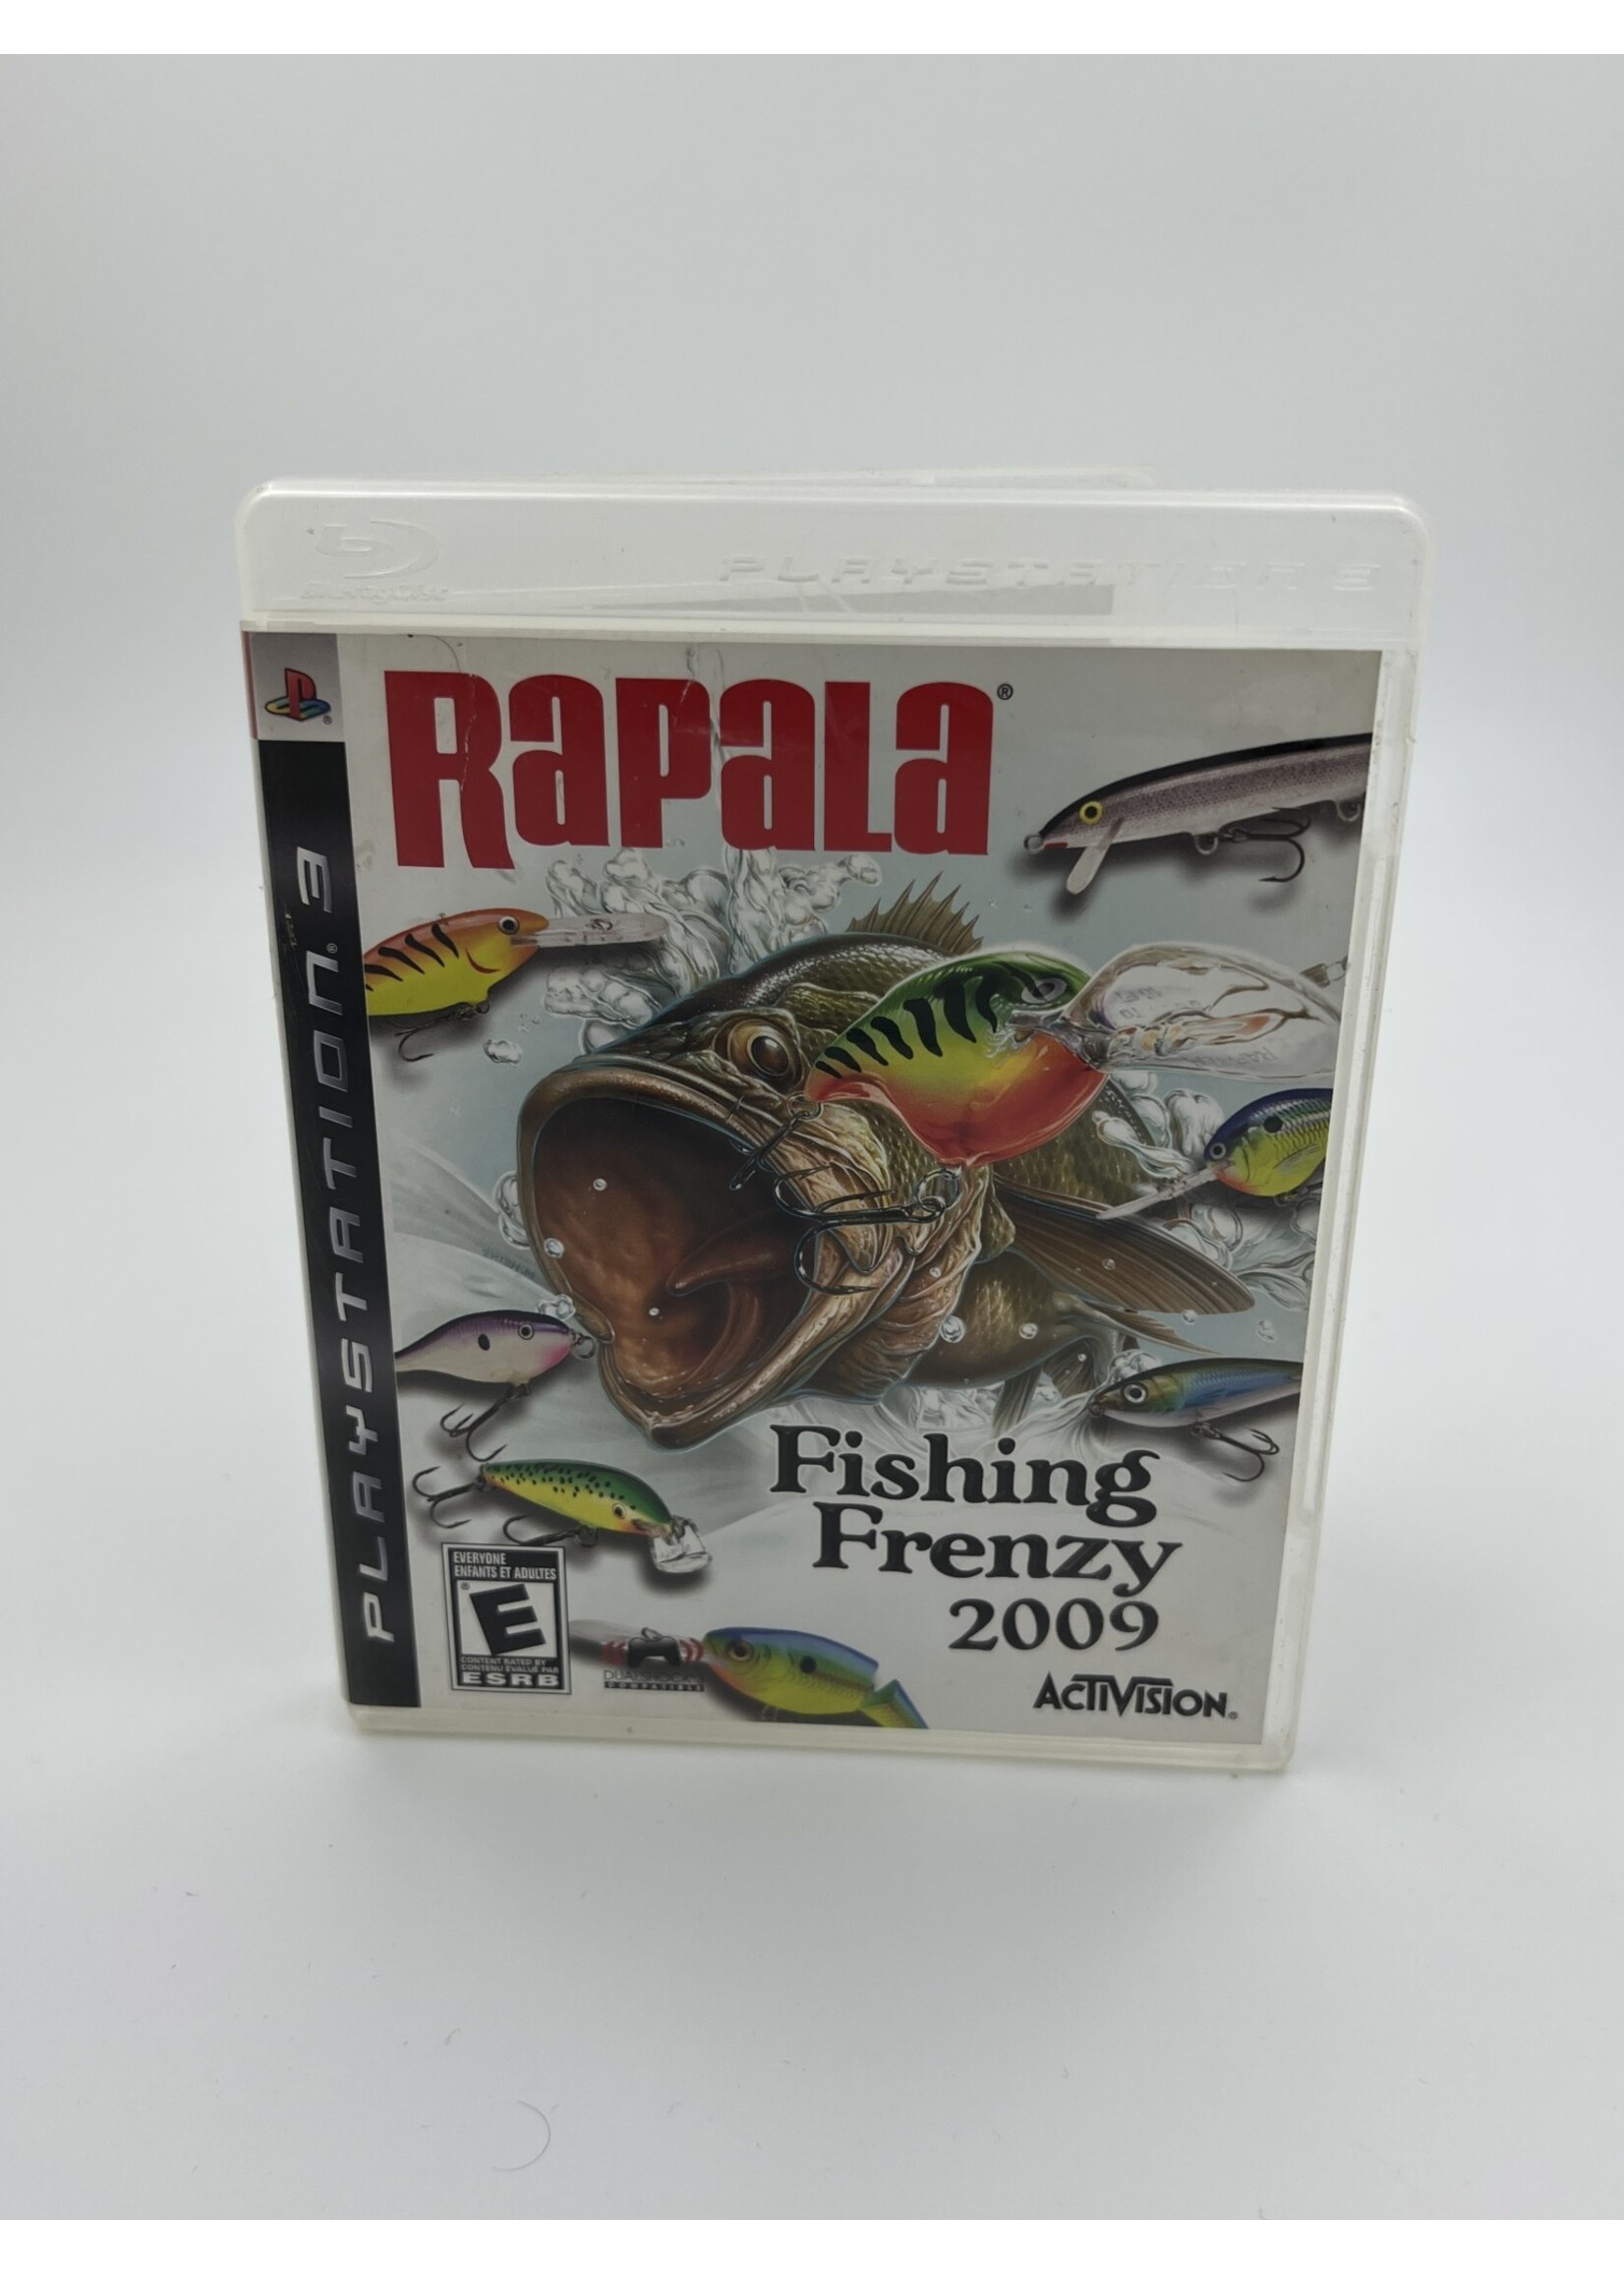 Rapala Fishing Frenzy 2009 PS3 - This N That